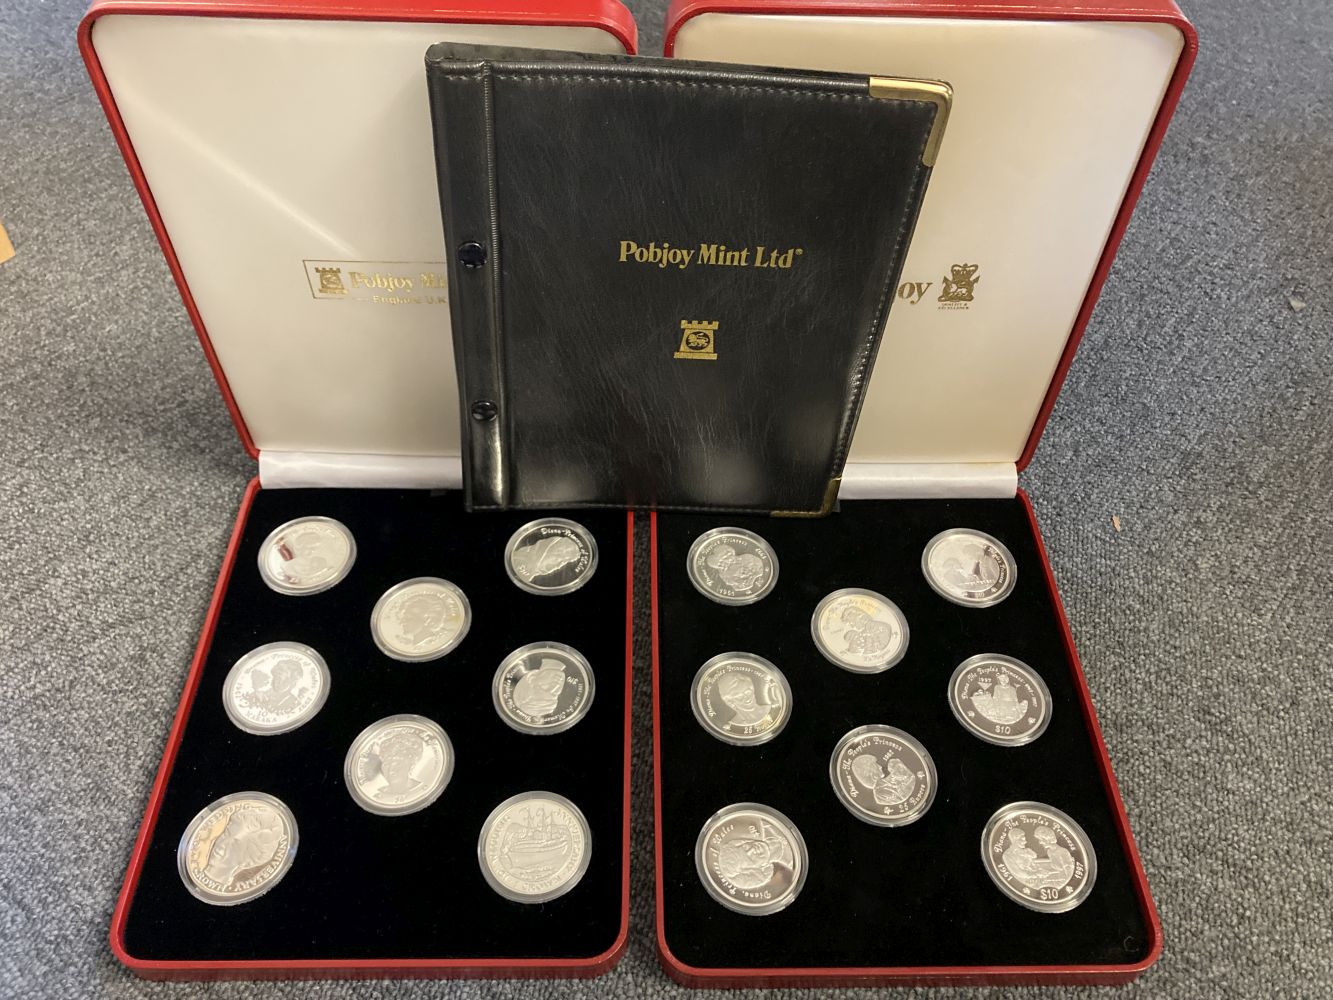 Proof Coins. Pobjoy Mint Ltd, 16 silver proof crowns, Princess Diana